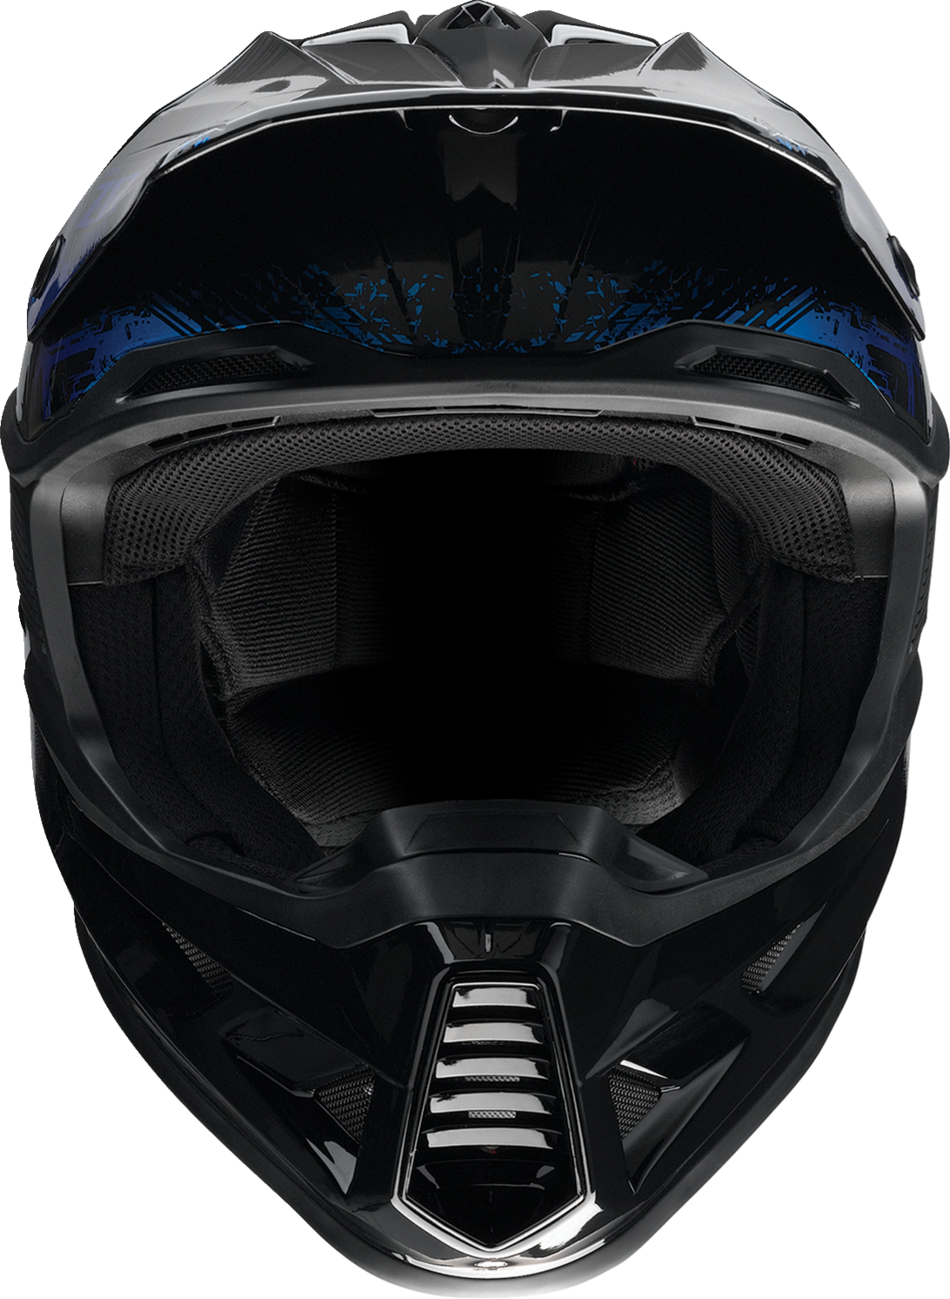 Z1R F.I. Helmet - Fractal - MIPS - Blue - XL 0110-7791